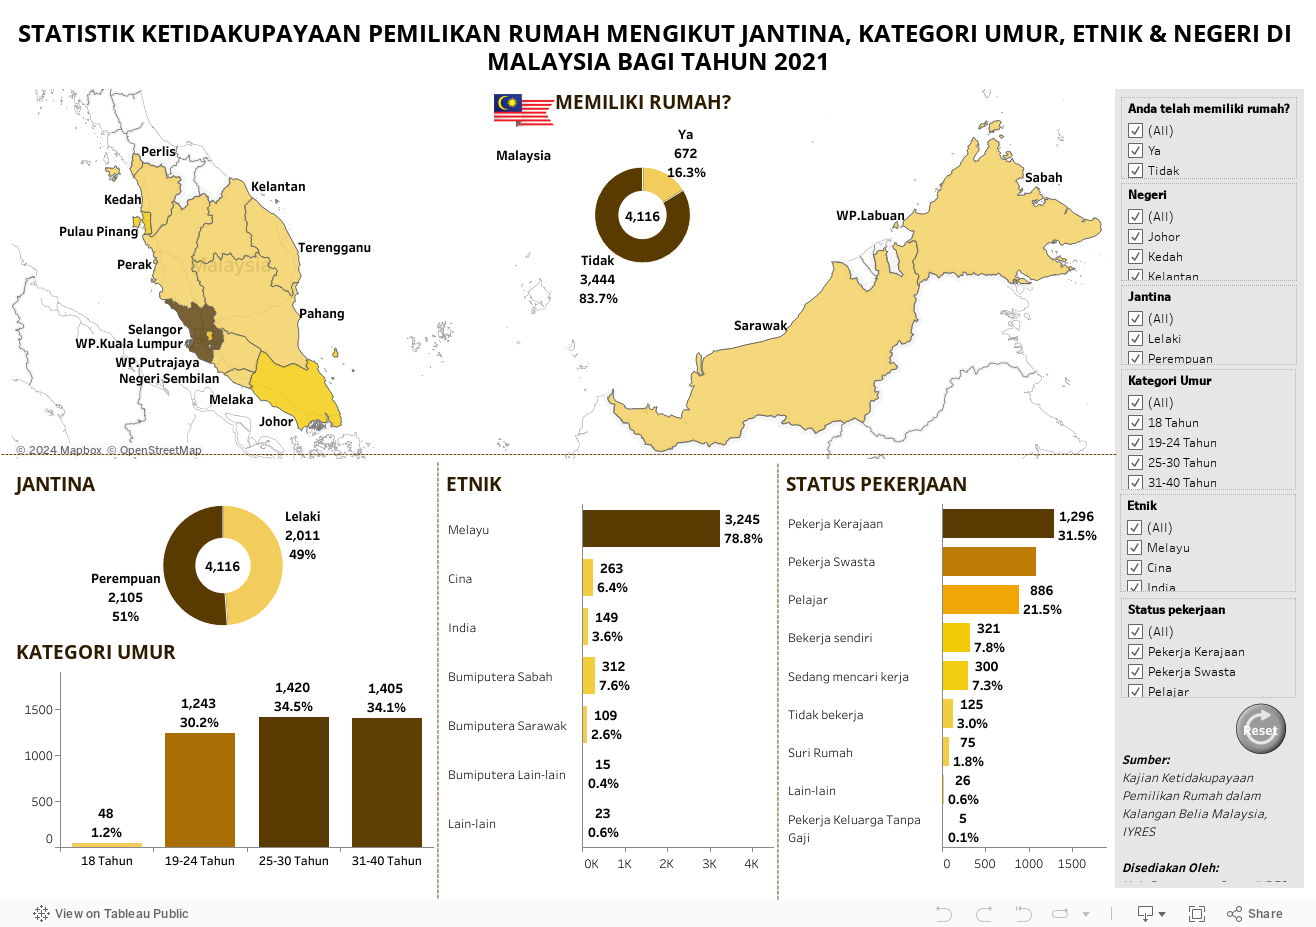 STATISTIK KETIDAKUPAYAAN PEMILIKAN RUMAH MENGIKUT JANTINA, KATEGORI UMUR, ETNIK & NEGERI DI MALAYSIA BAGI TAHUN 2021 